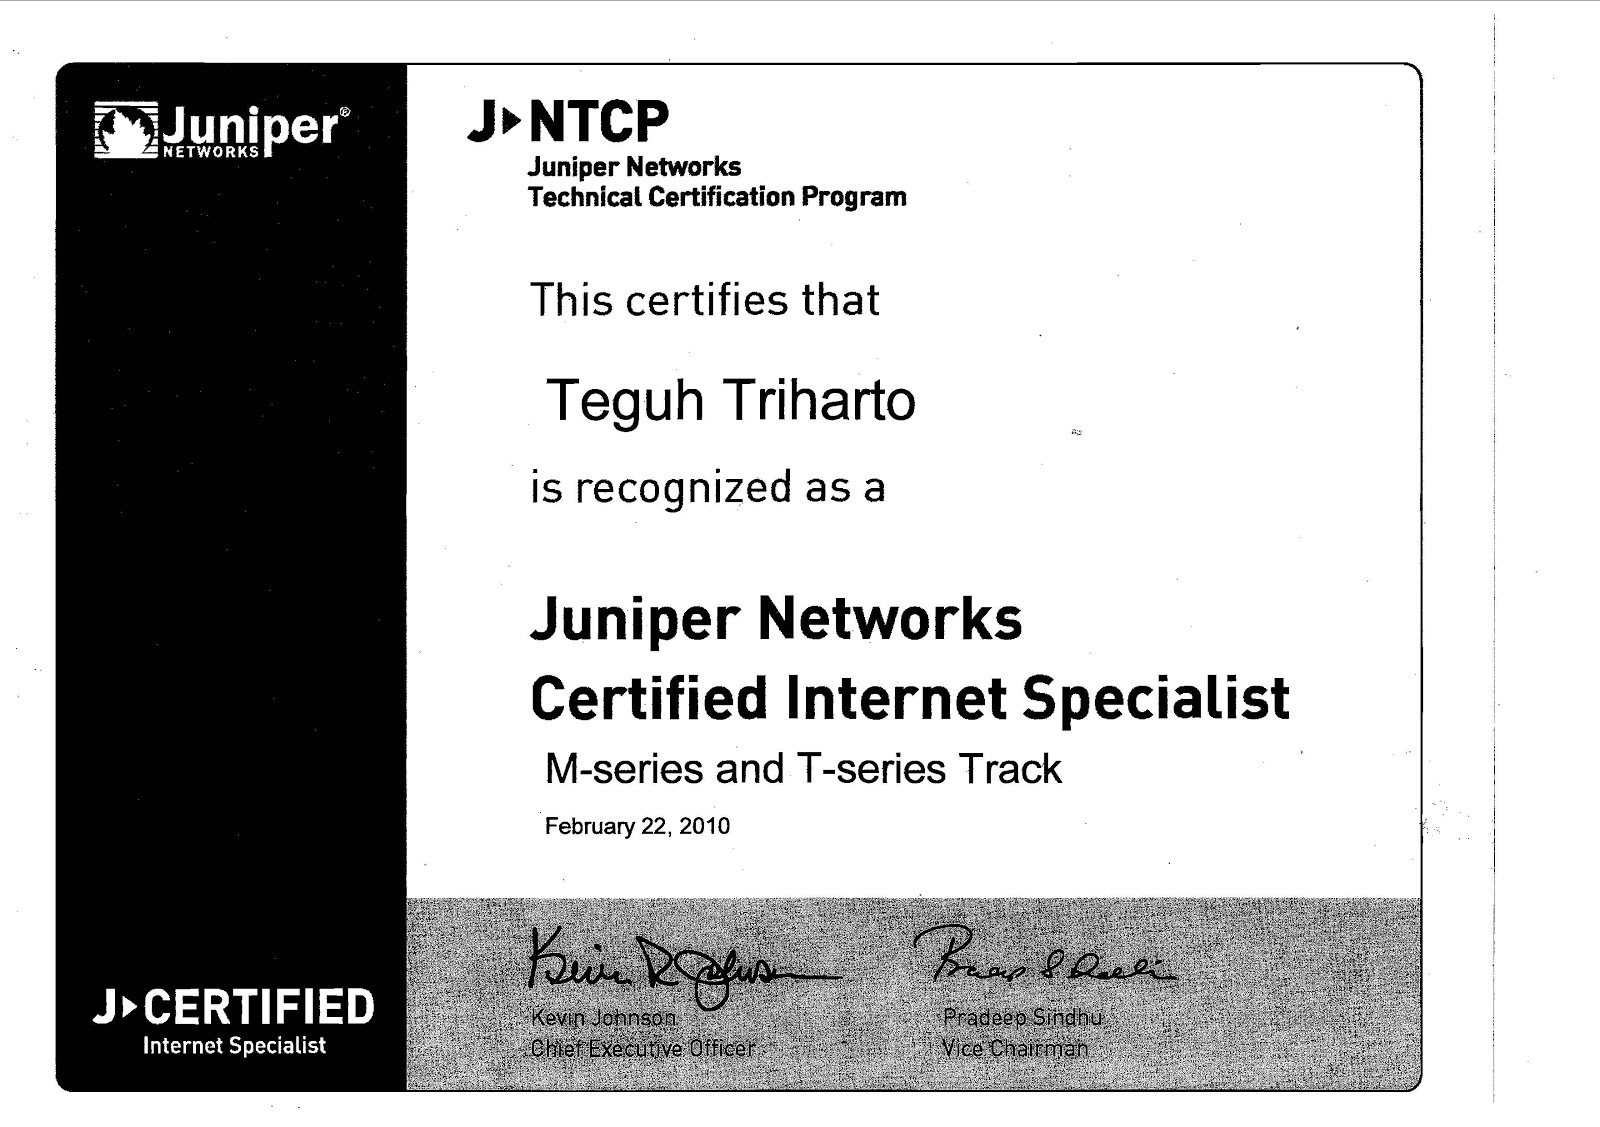 Teguh Triharto: .::: Sertifikasi Teguh Triharto pour Juniper Networks Certified Internet Specialist Training 